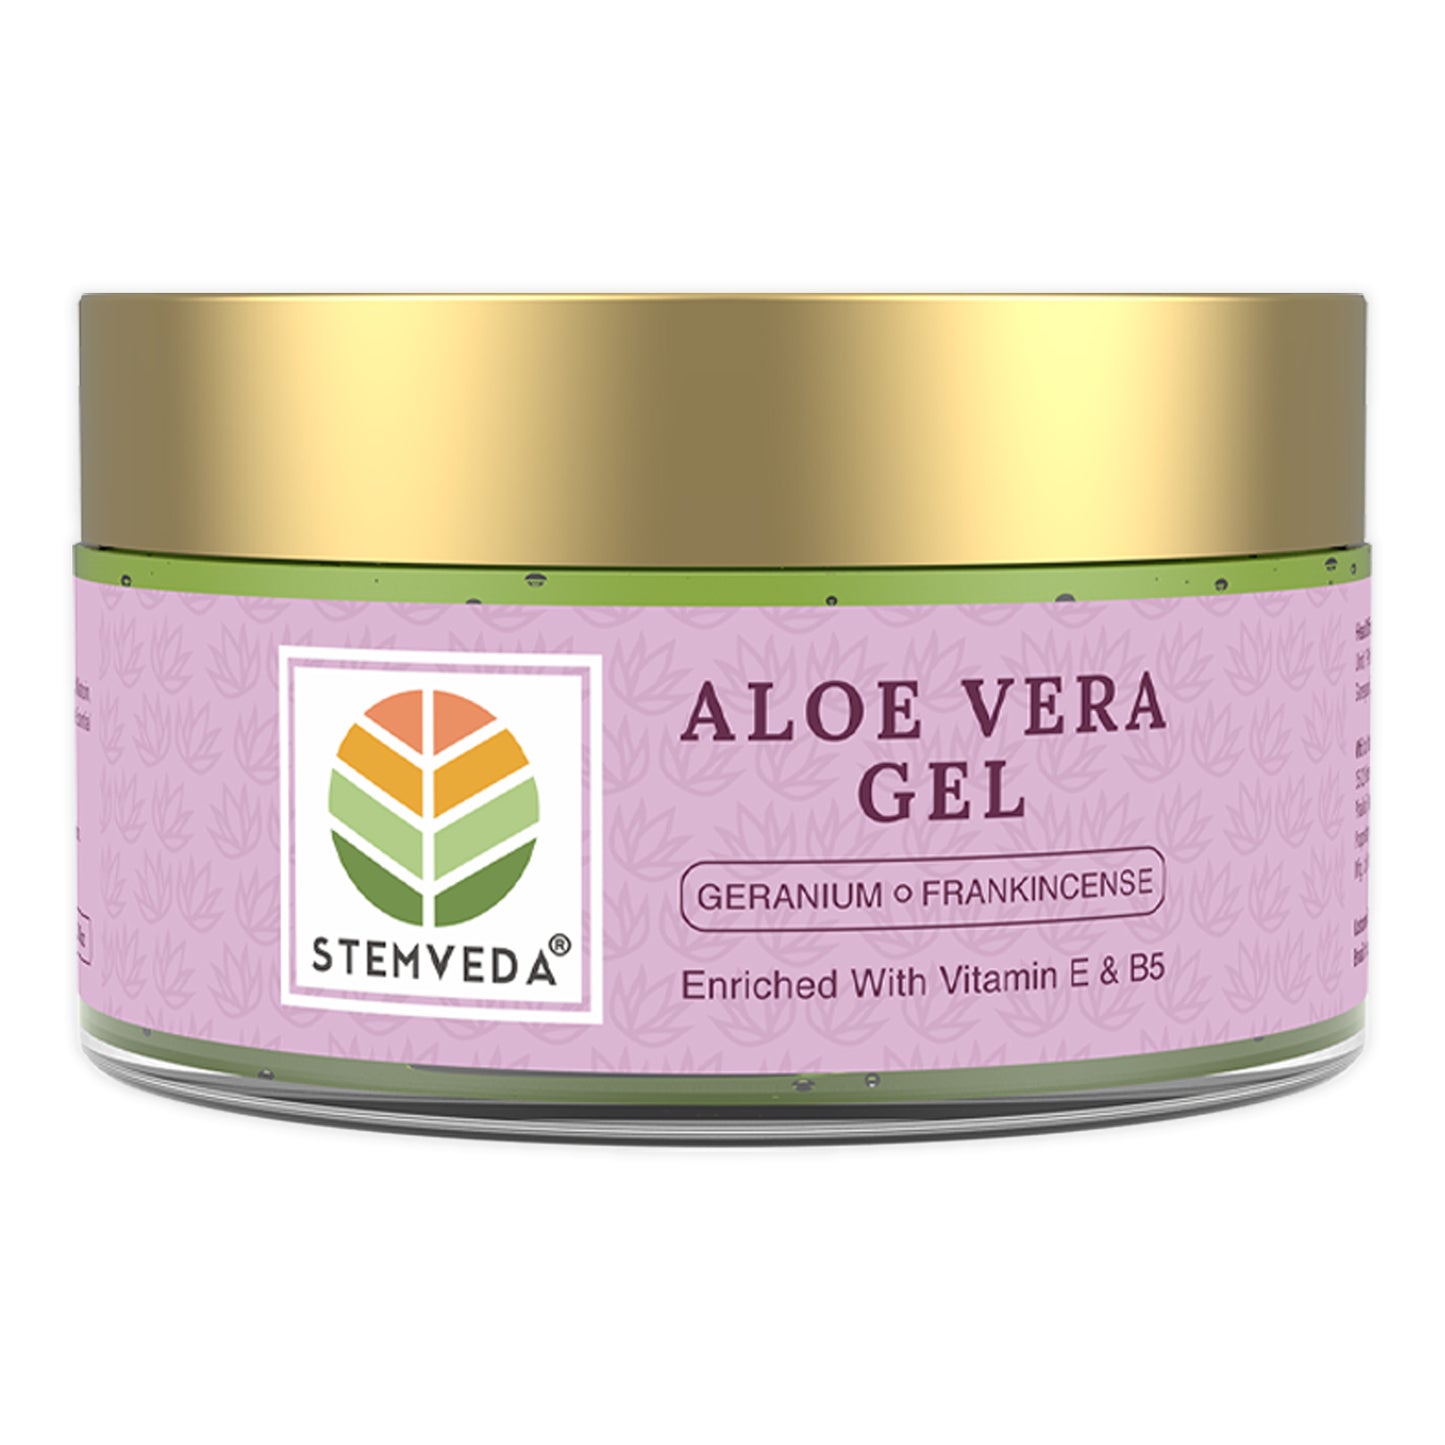 Aloe Vera Gel (Geranium Frankincense) - 25g